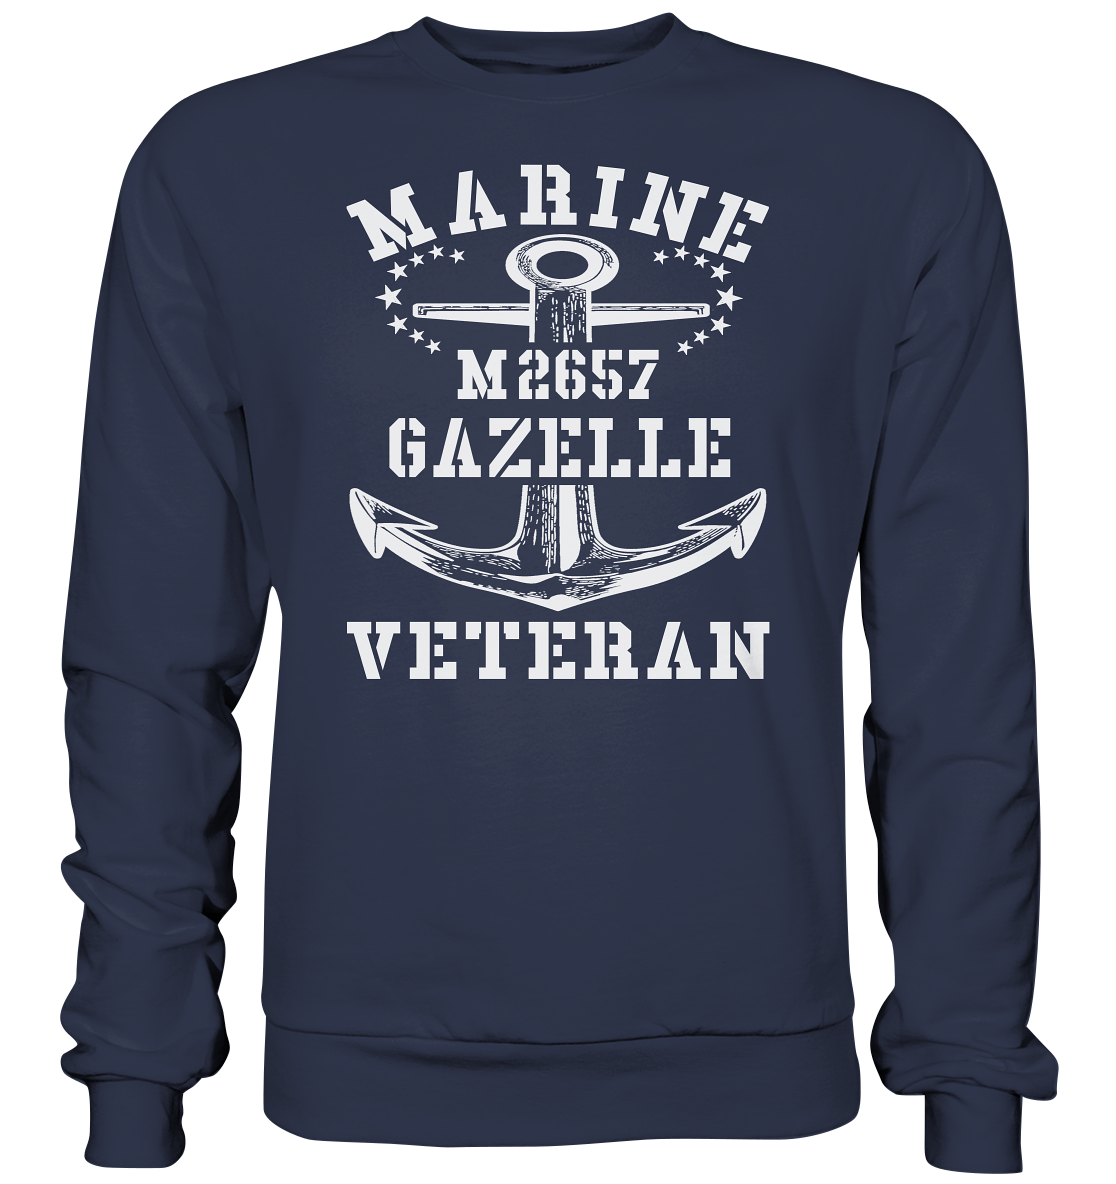 BiMi M2657 GAZELLE Marine Veteran - Premium Sweatshirt